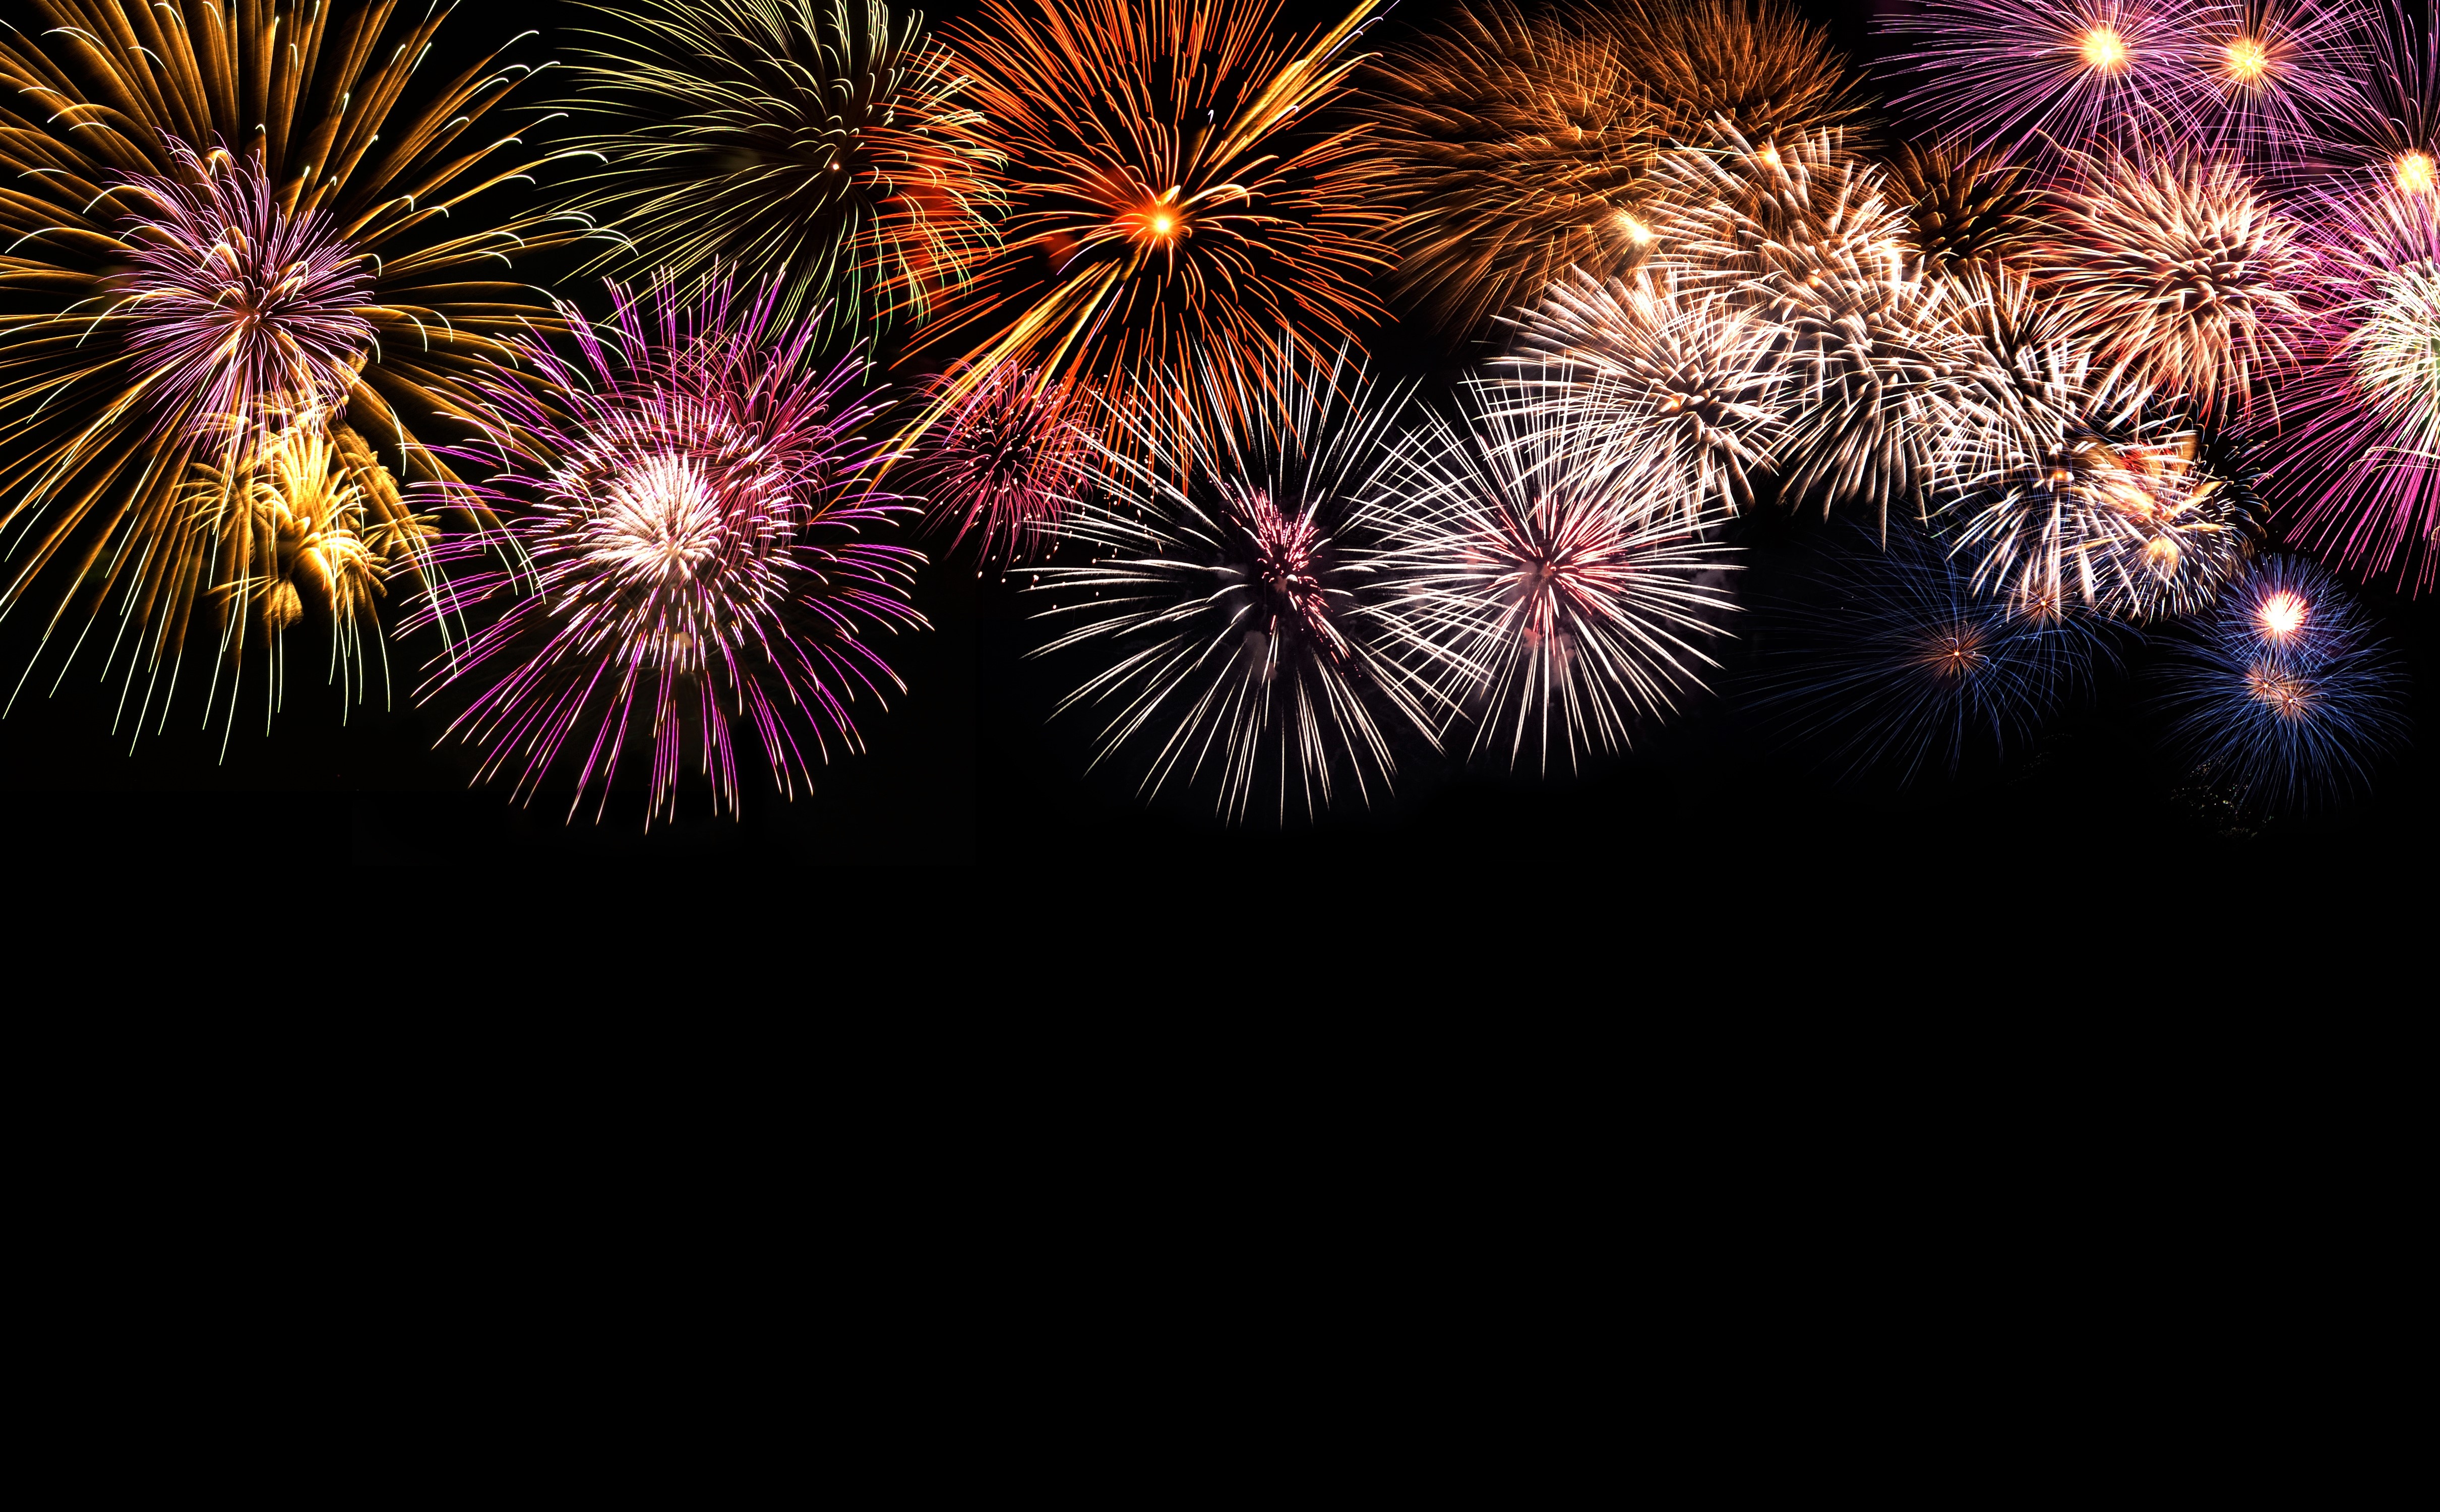 Fireworks 4k Ultra HD Wallpaper Background Image